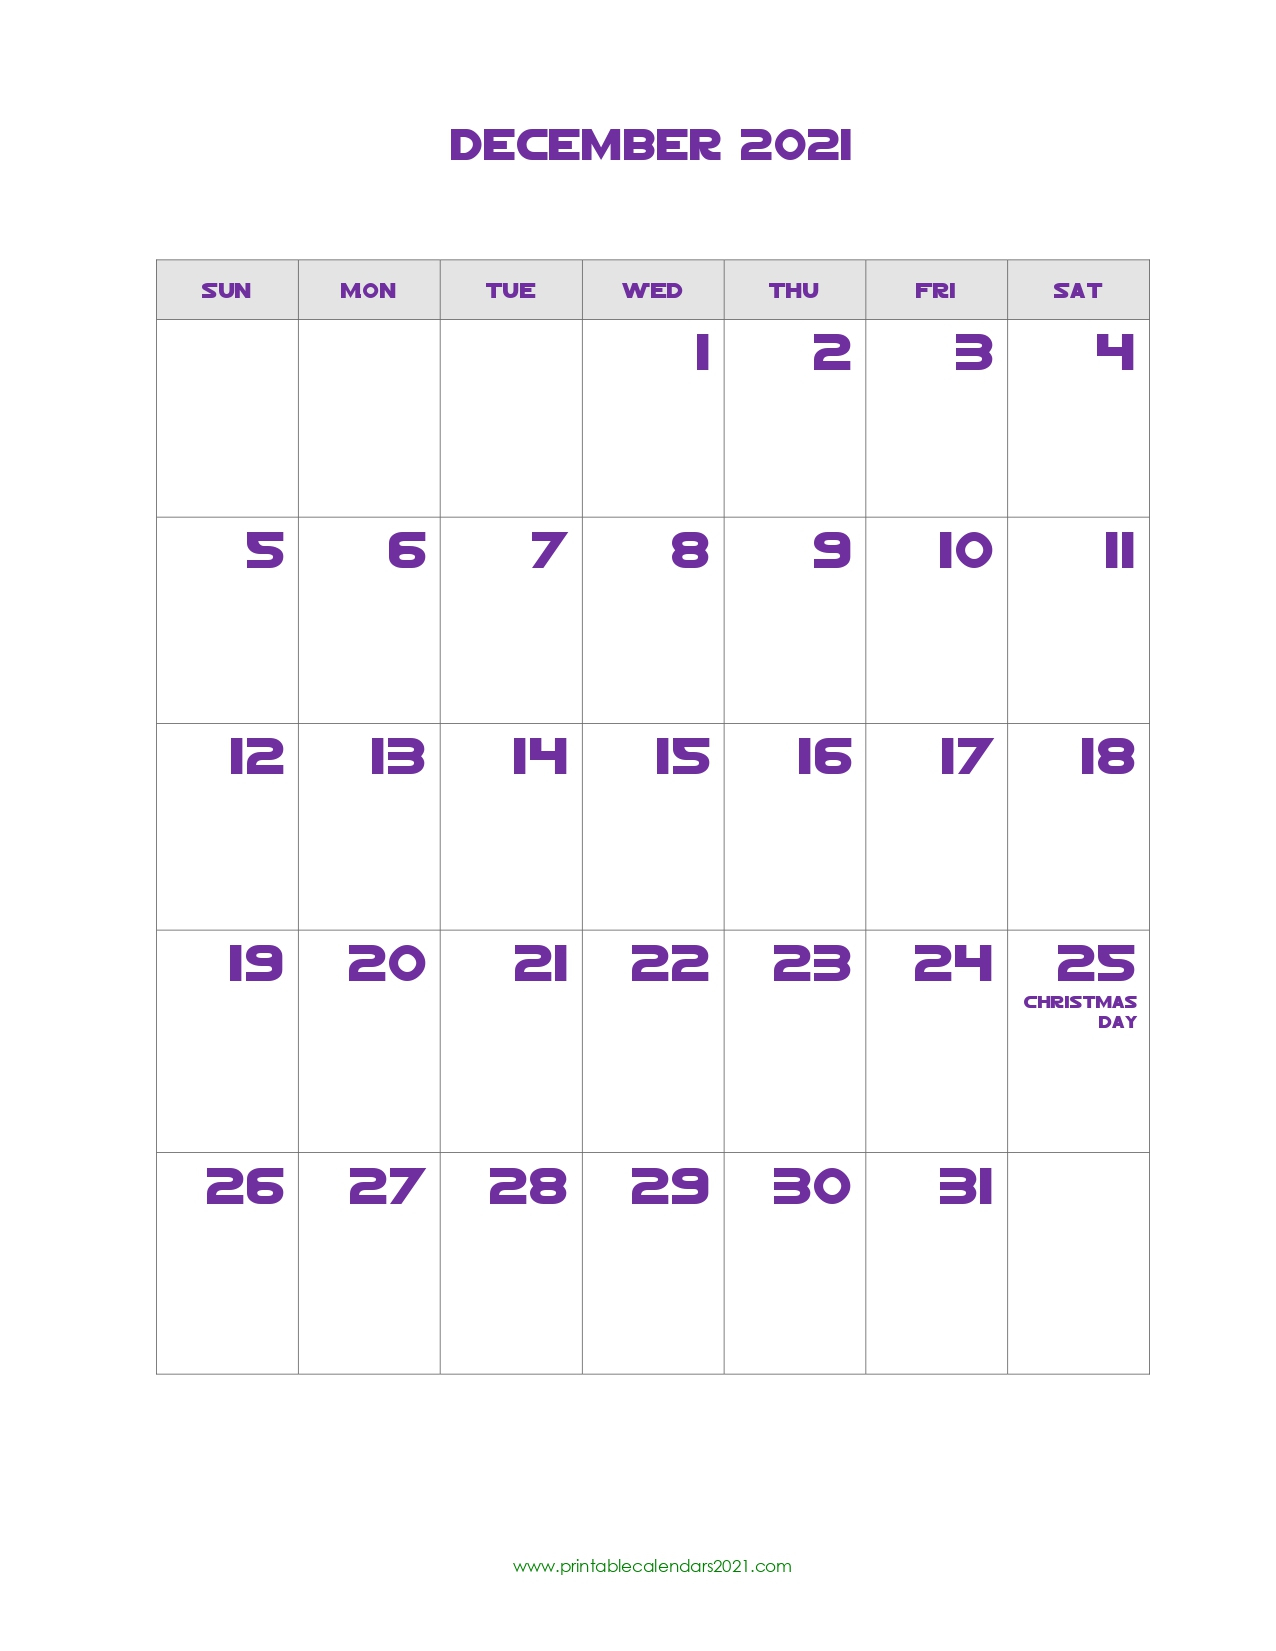 40+ December 2021 Calendar Printable, December 2021